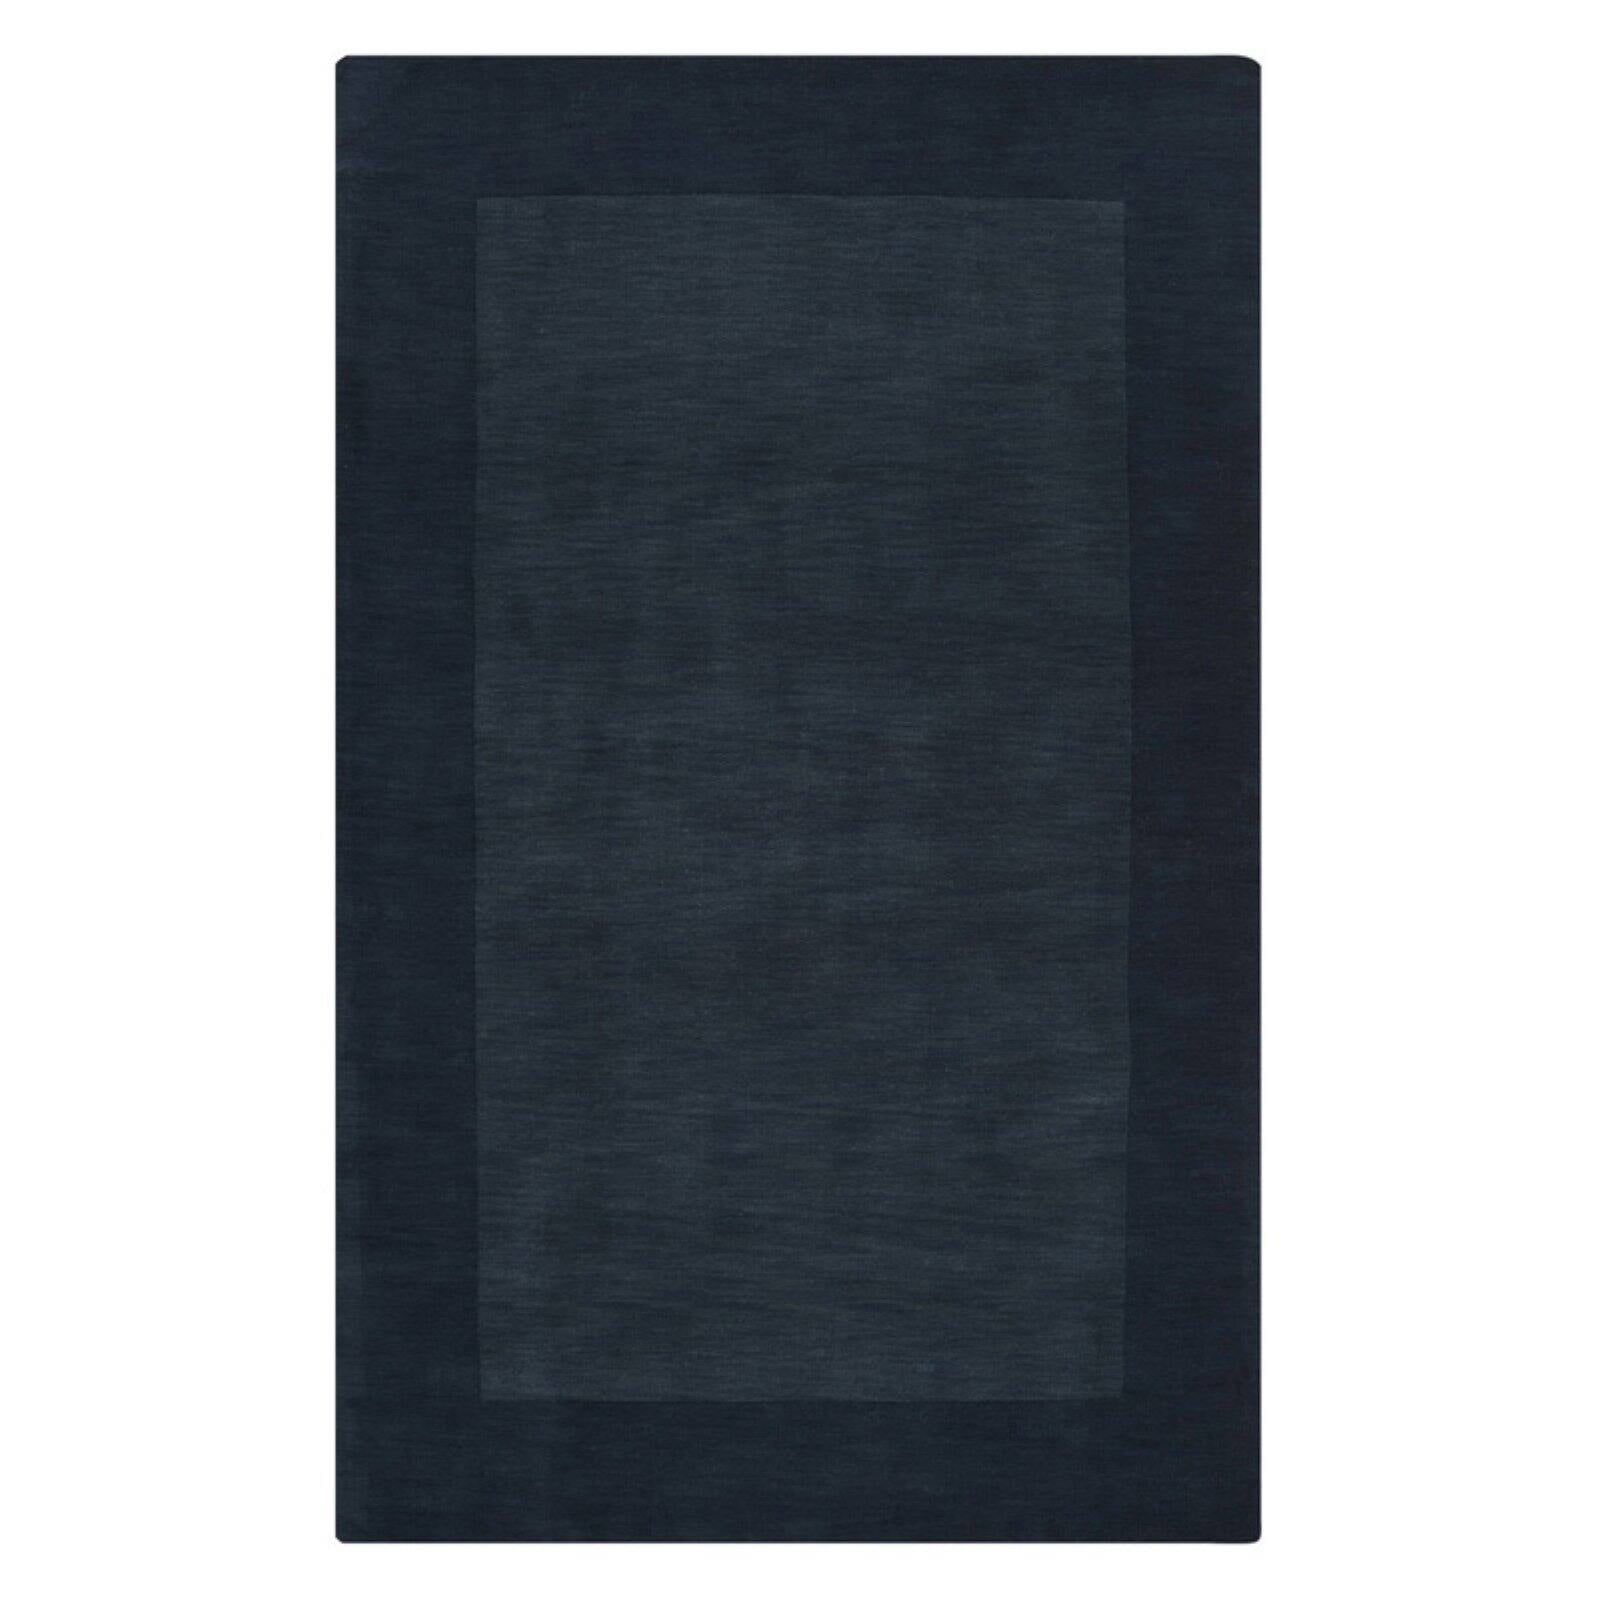 Surya Mystique M-330 Hand Loomed 100% Wool Sapphire Blue 12' x 15' Area Rug